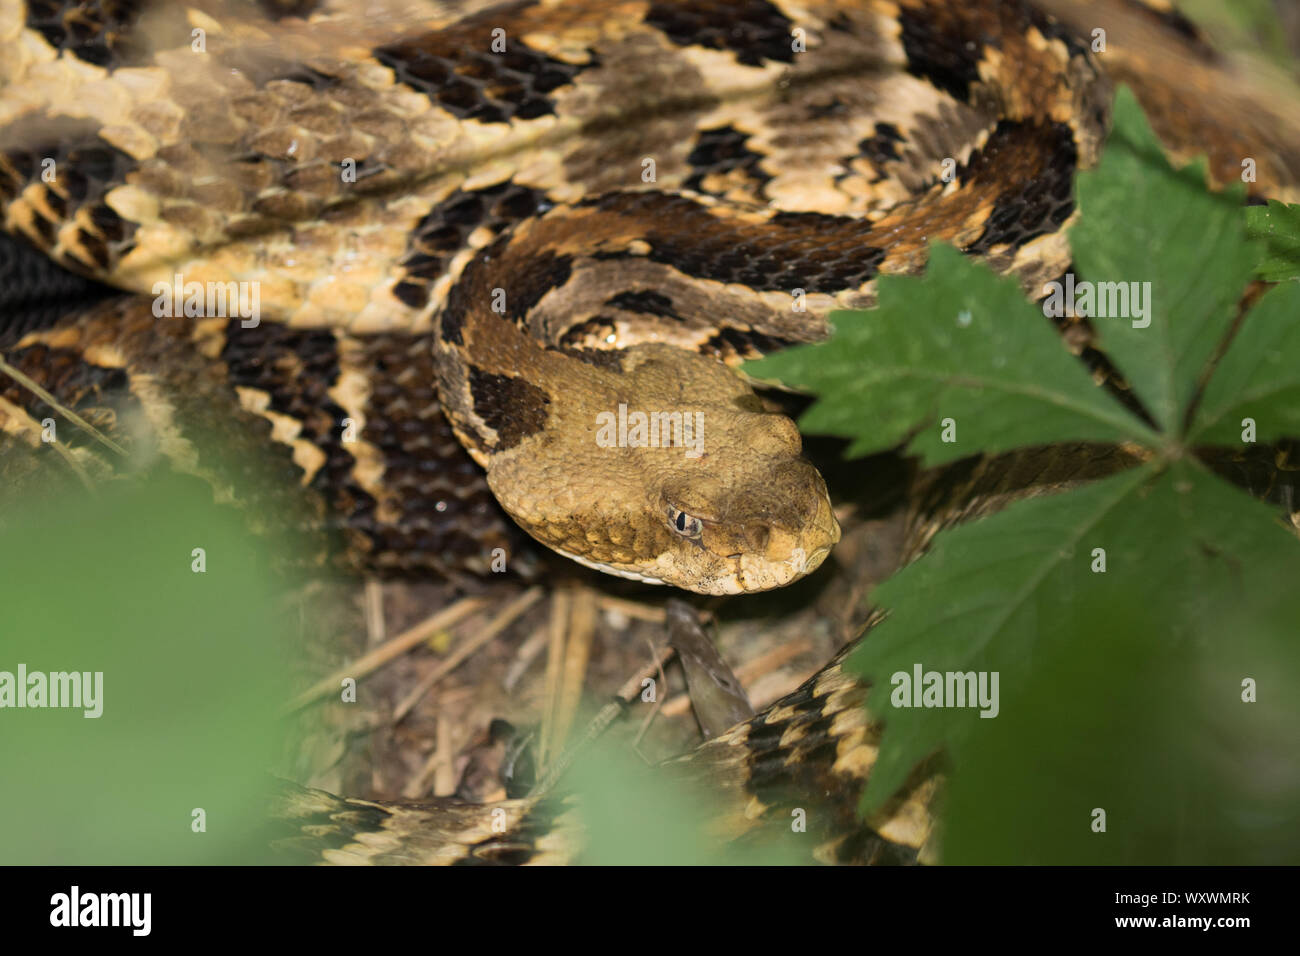 Close-up of an adult timber rattlesnake, Crotalus horridus. Stock Photo